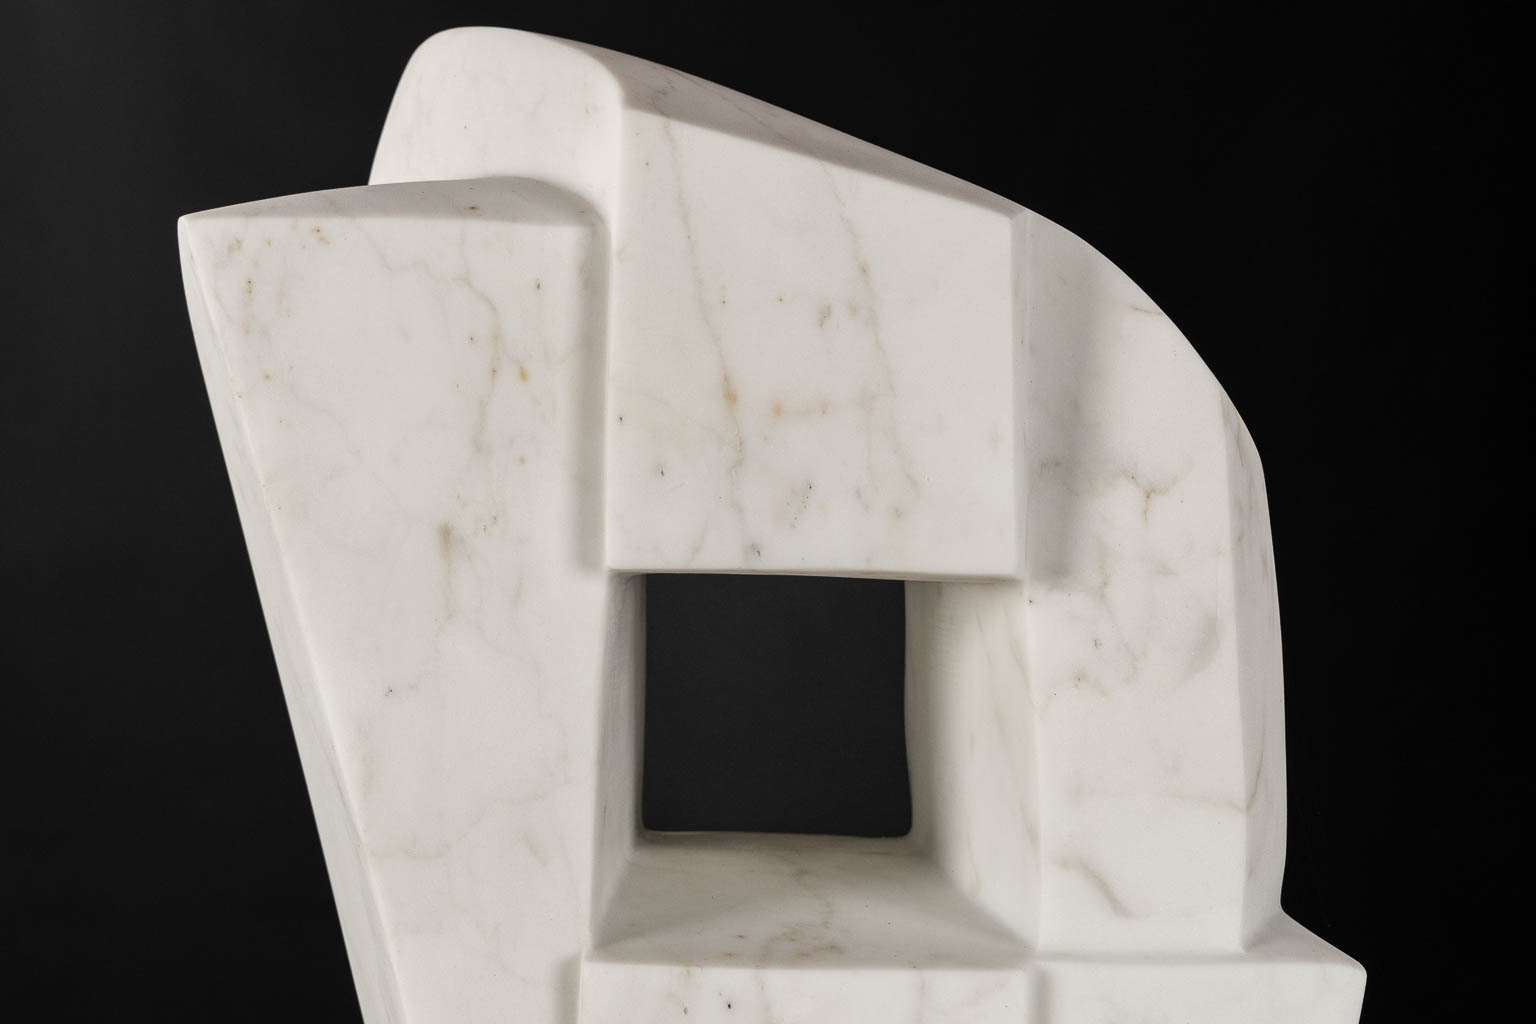 Lieven DEBRABANDERE (1945) 'De Gezant' gesculpteerde Carrara marmer. 2010. (L:42 x W:40 x H:96 cm)